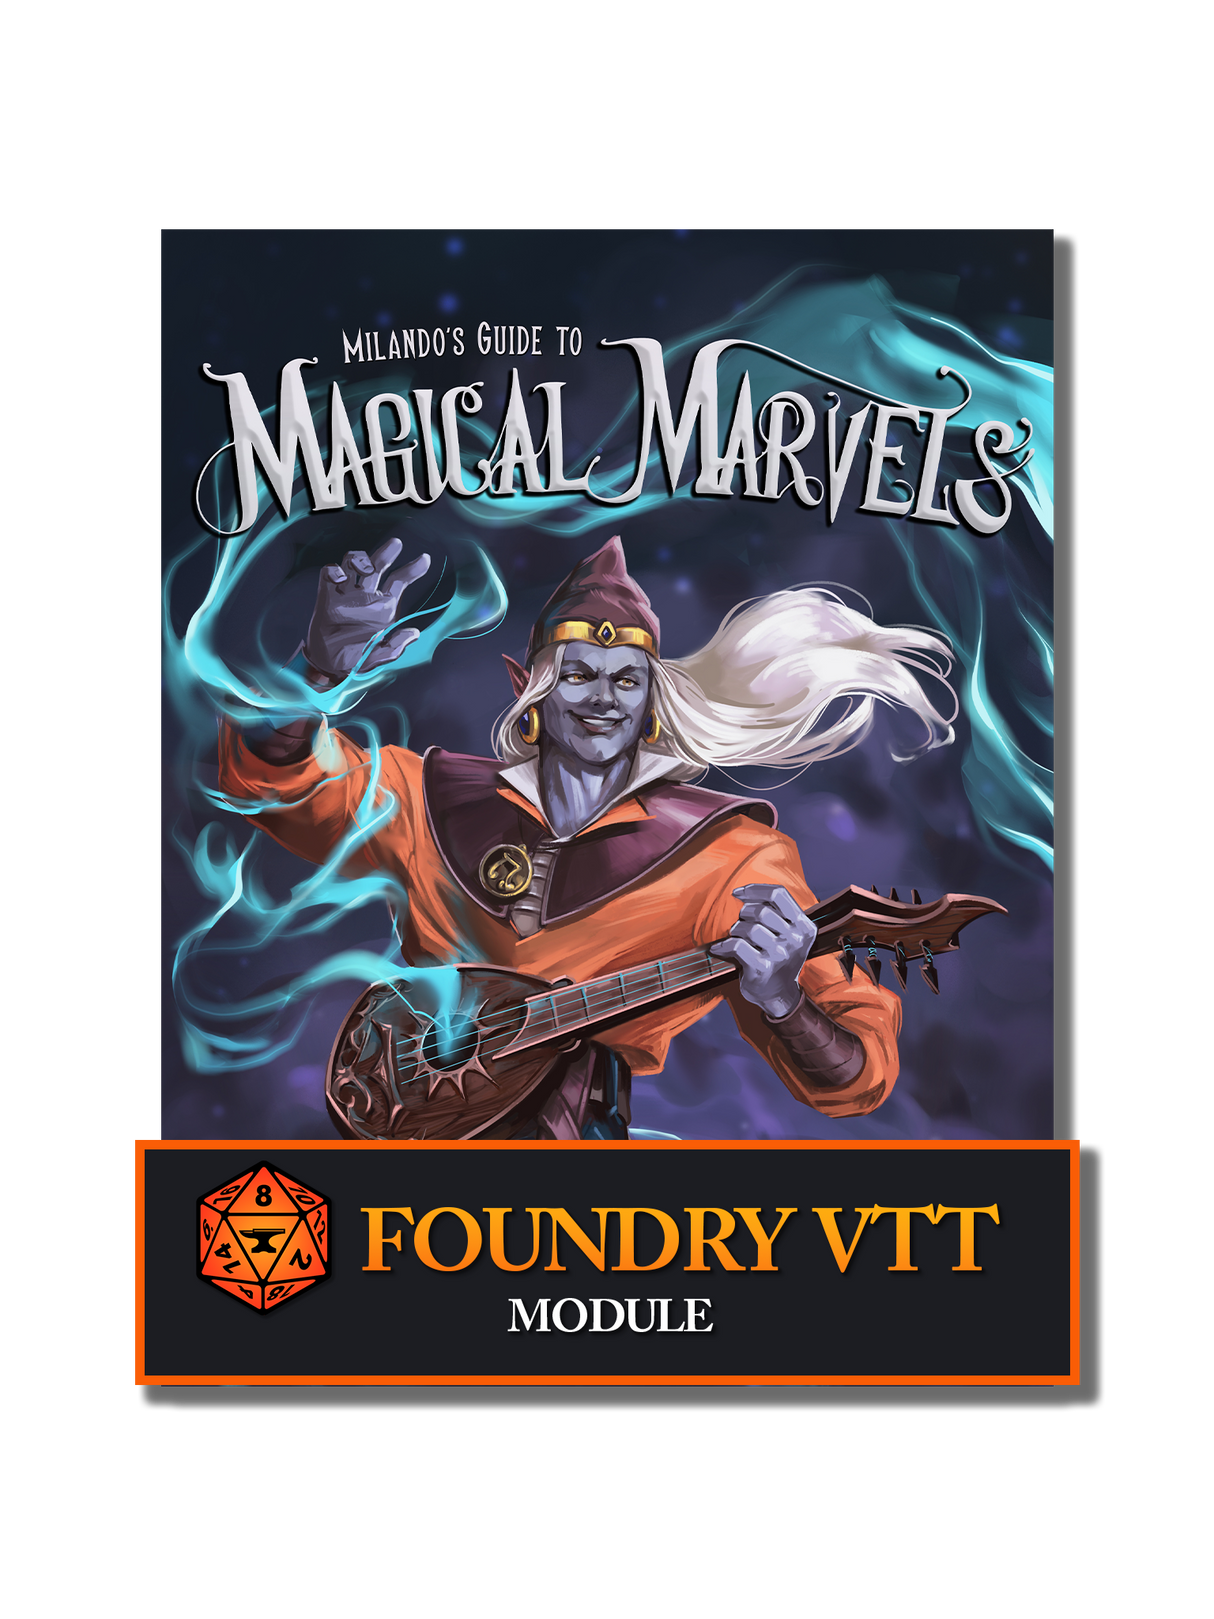 Milando's Guide to Magical Marvels – Foundry VTT